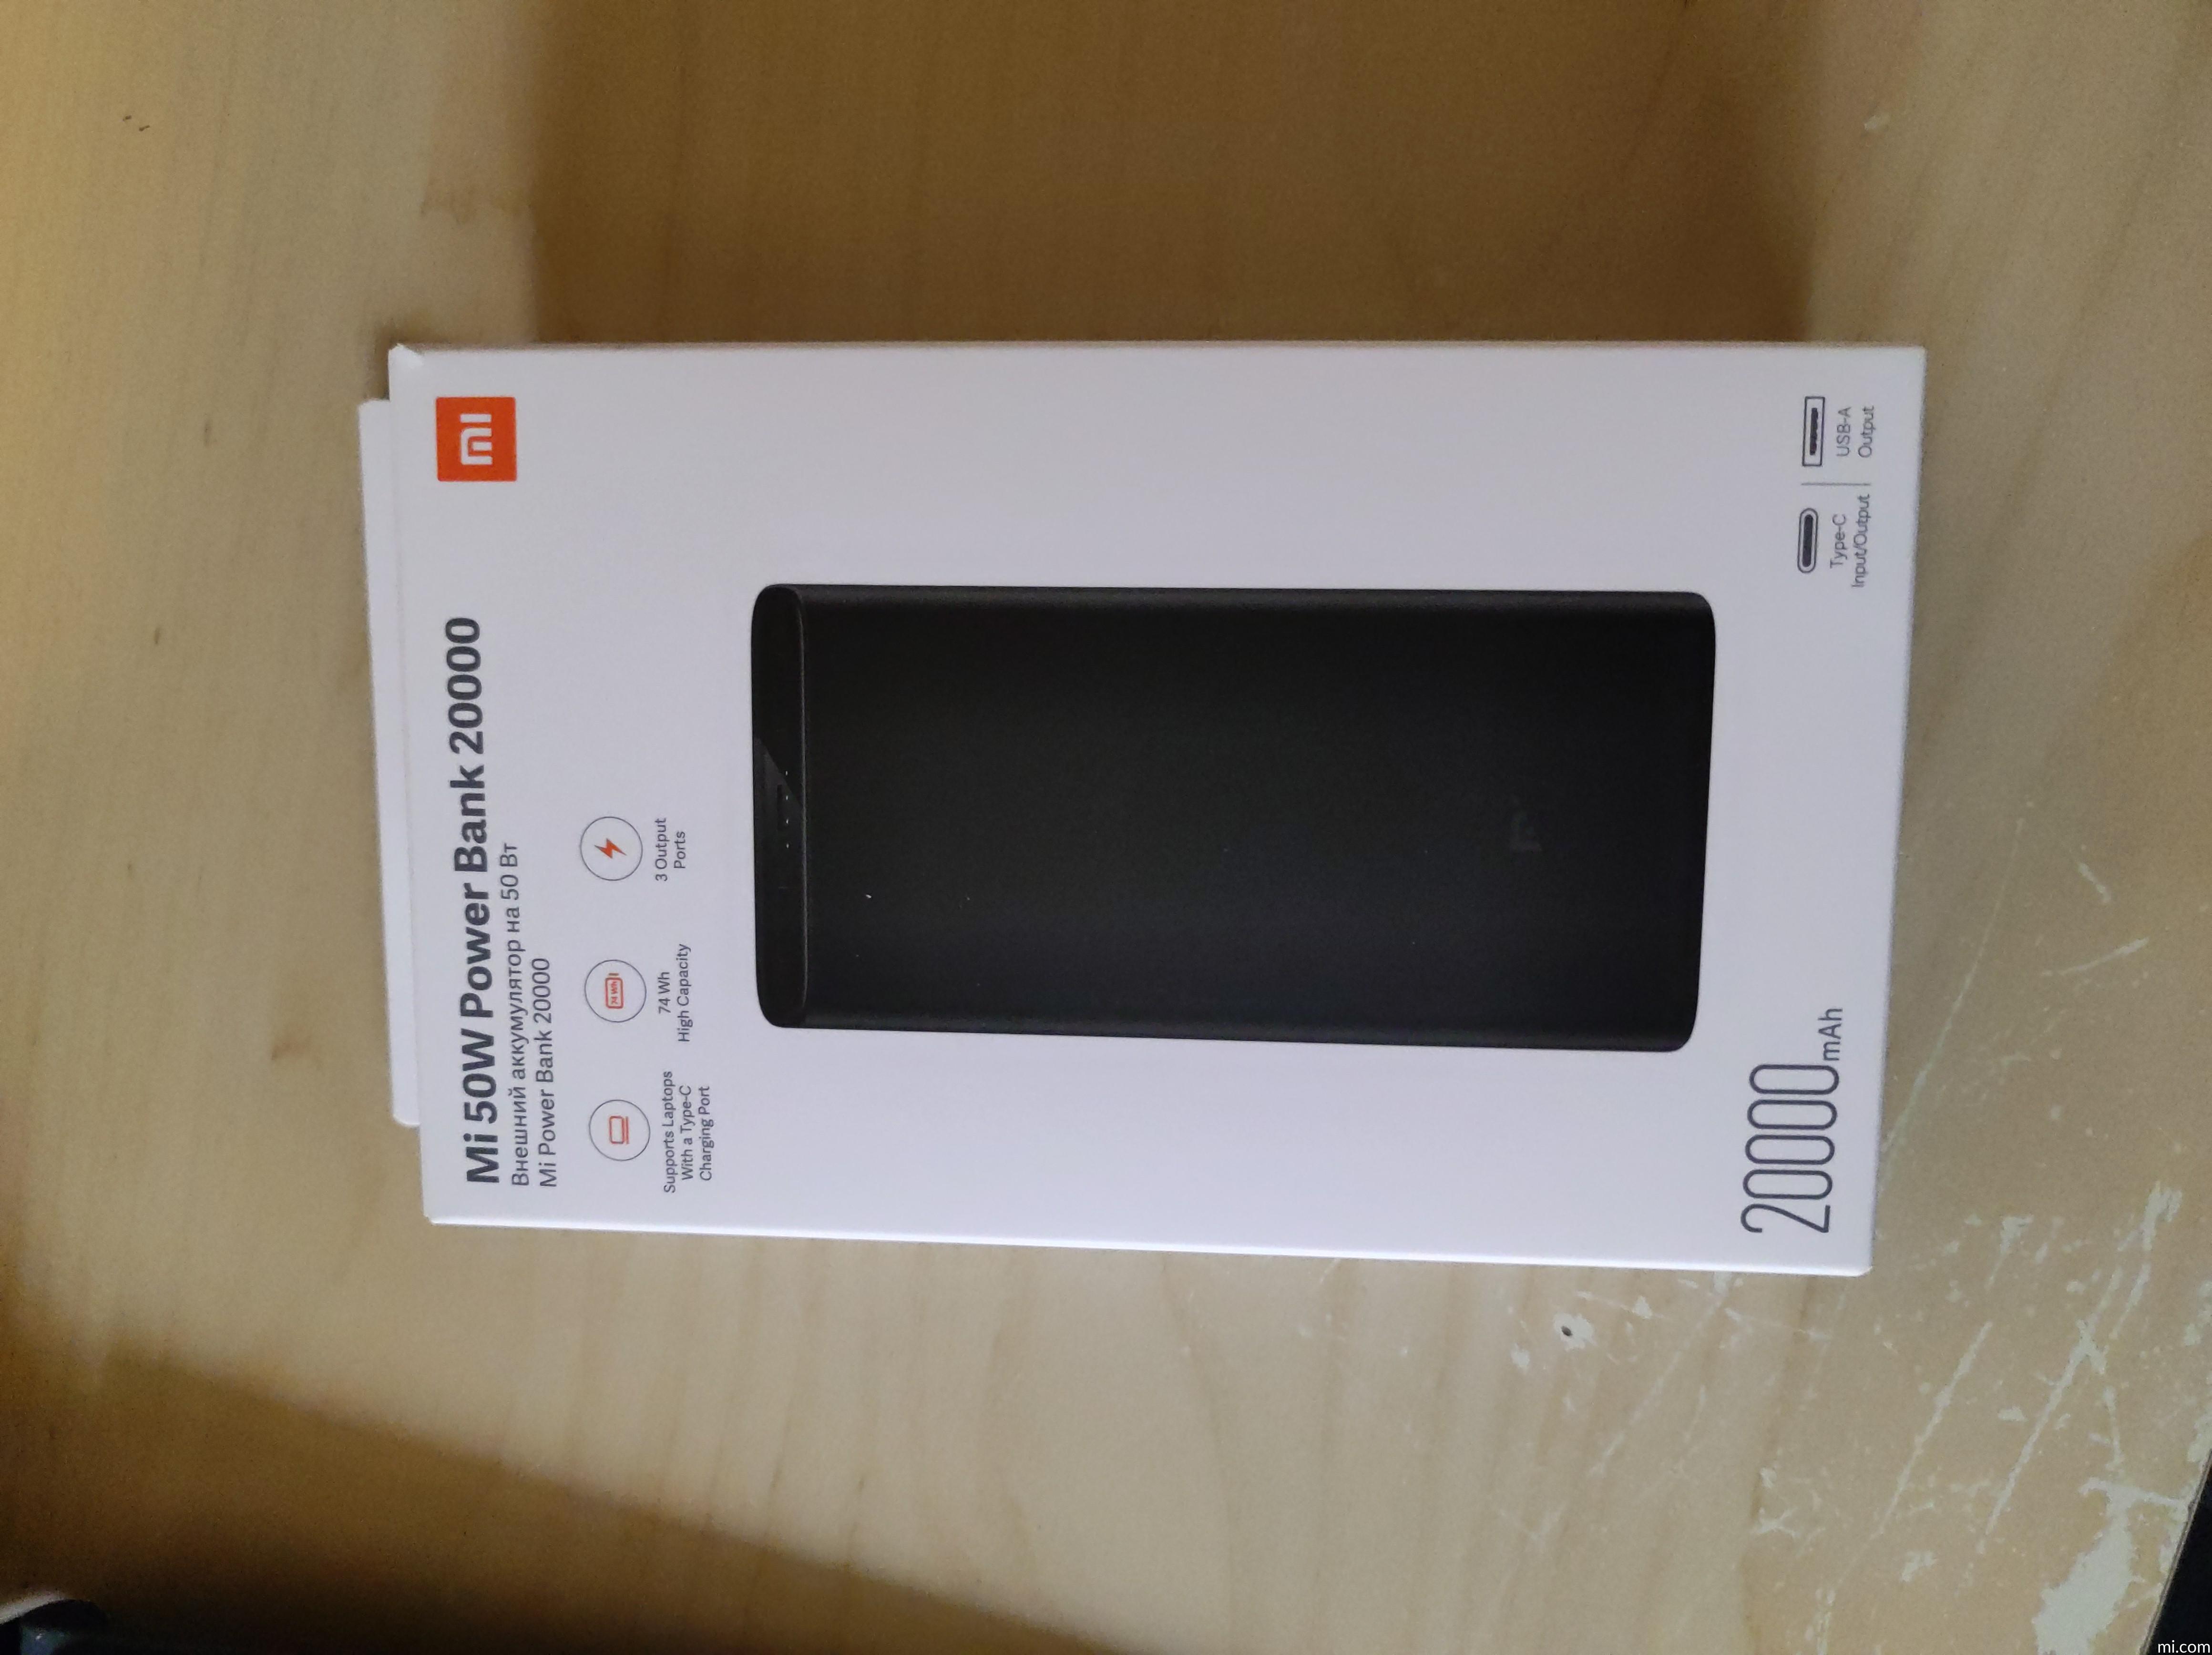 Xiaomi Mi 50W PowerBank 20000mAh USB-C, Carga Rapida 